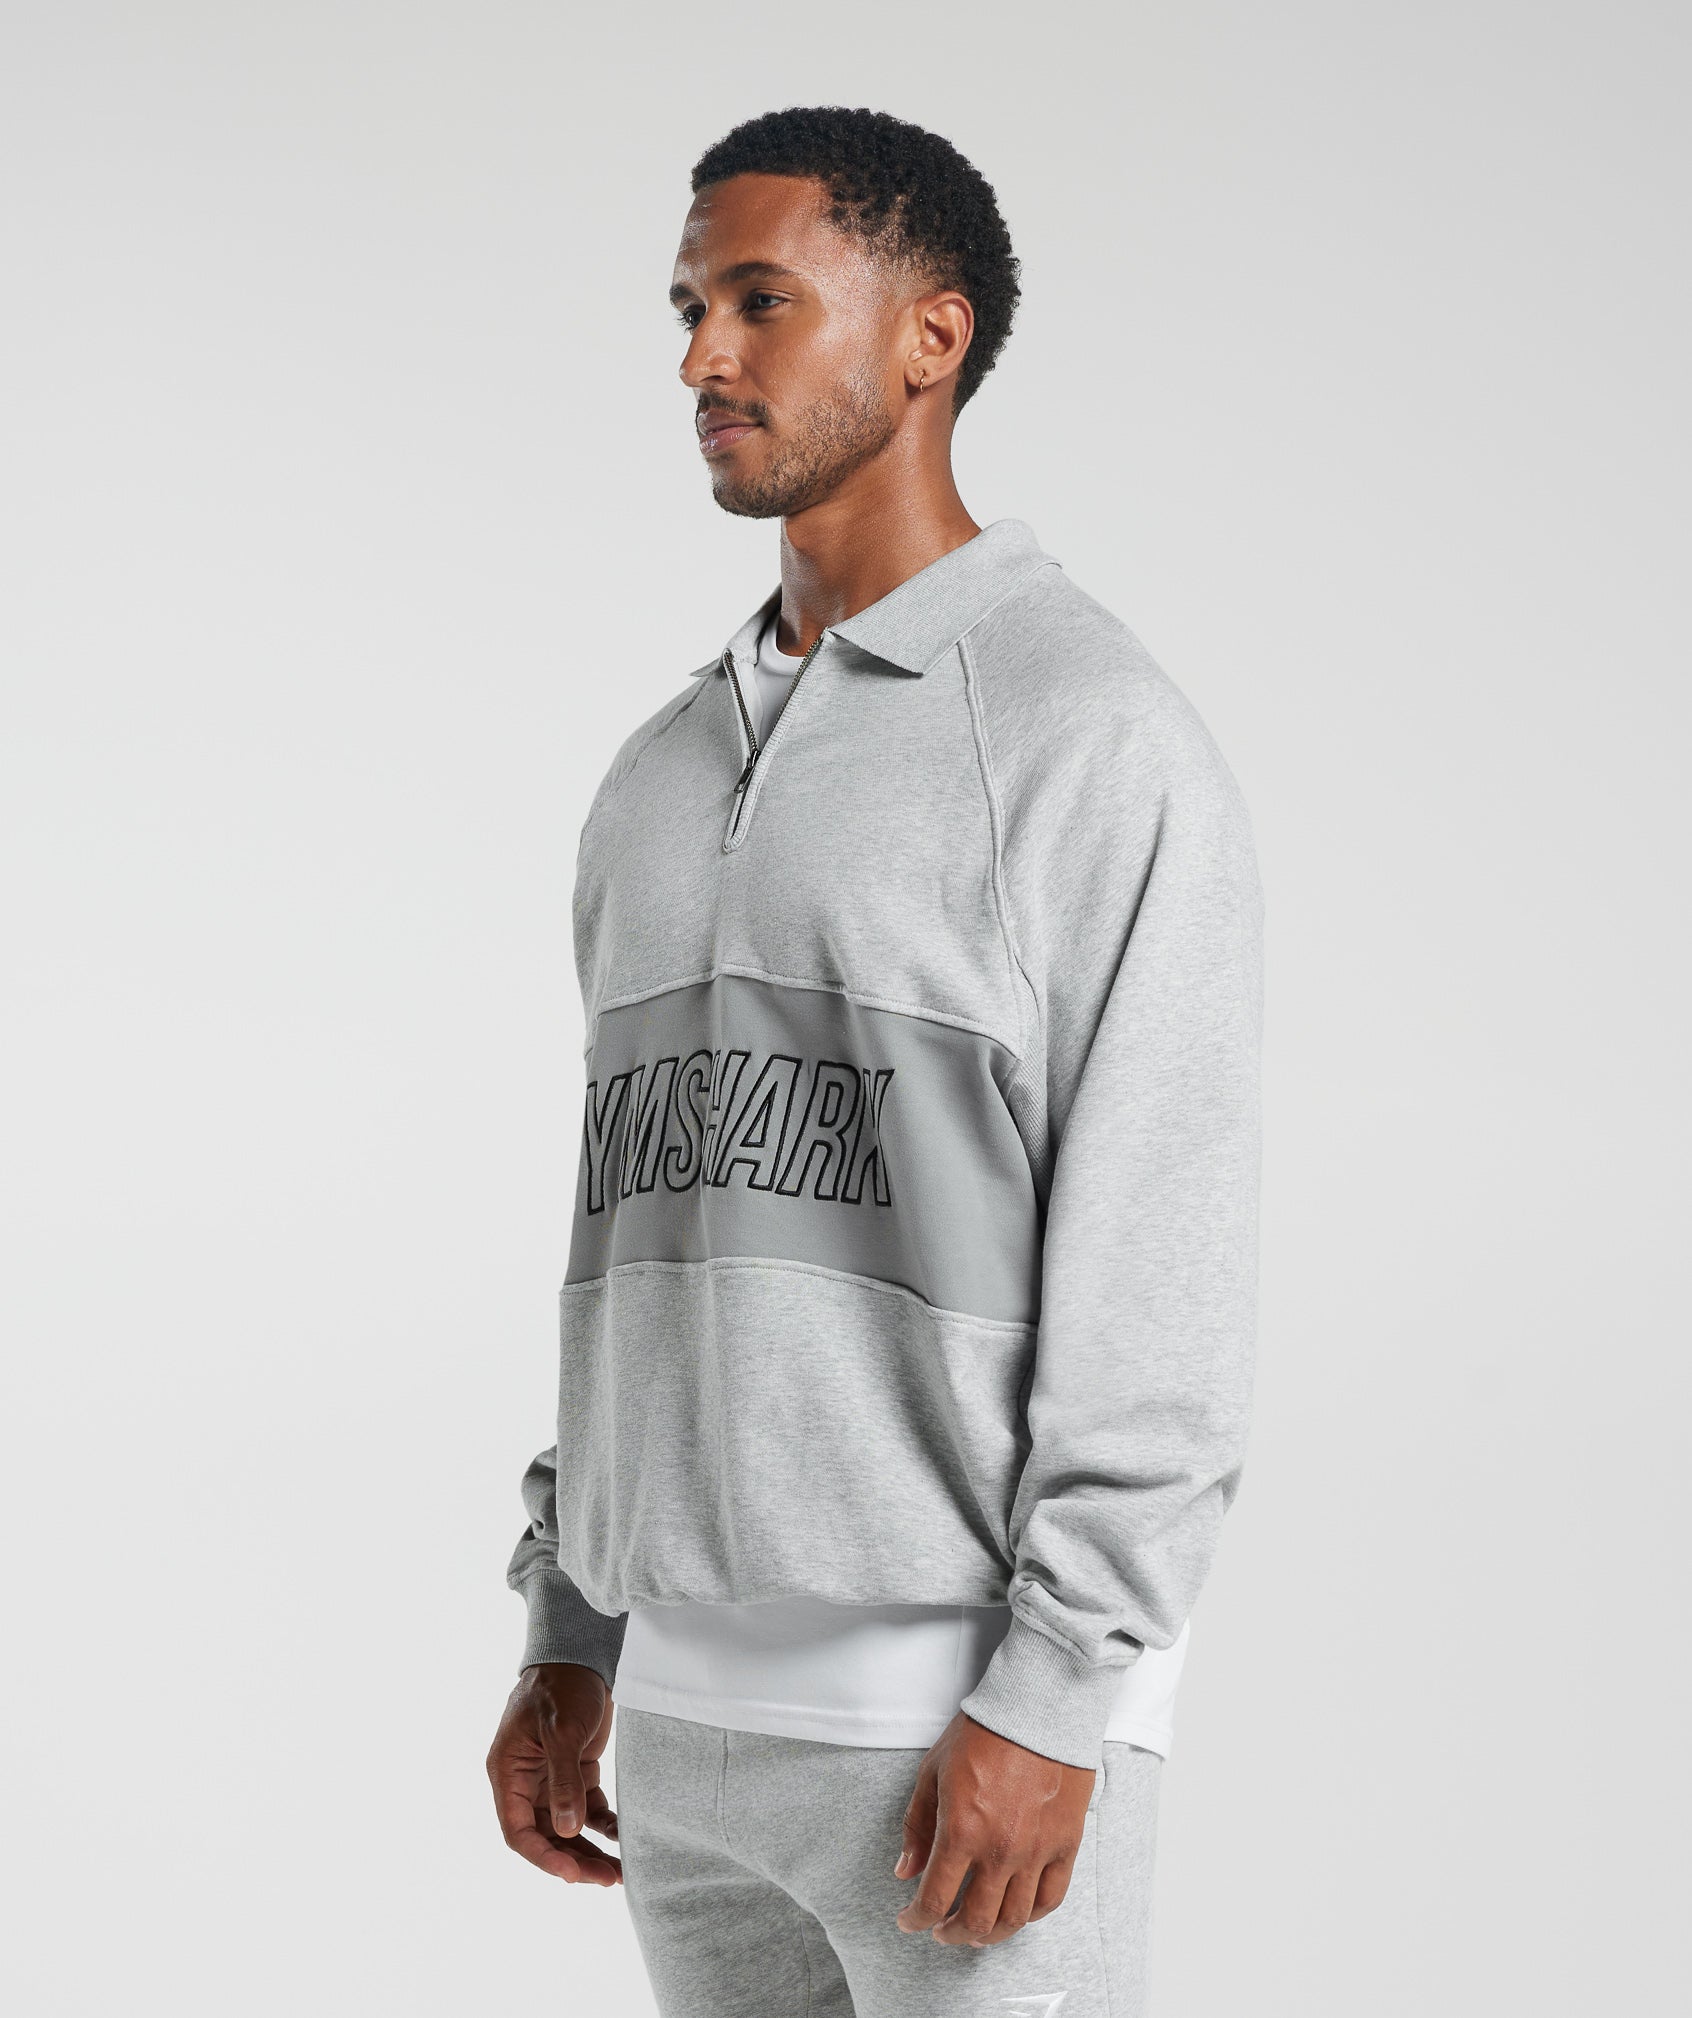 Rest Day Essentials Sweatshirt Polo in Light Grey Core Marl/Smokey Grey - view 3